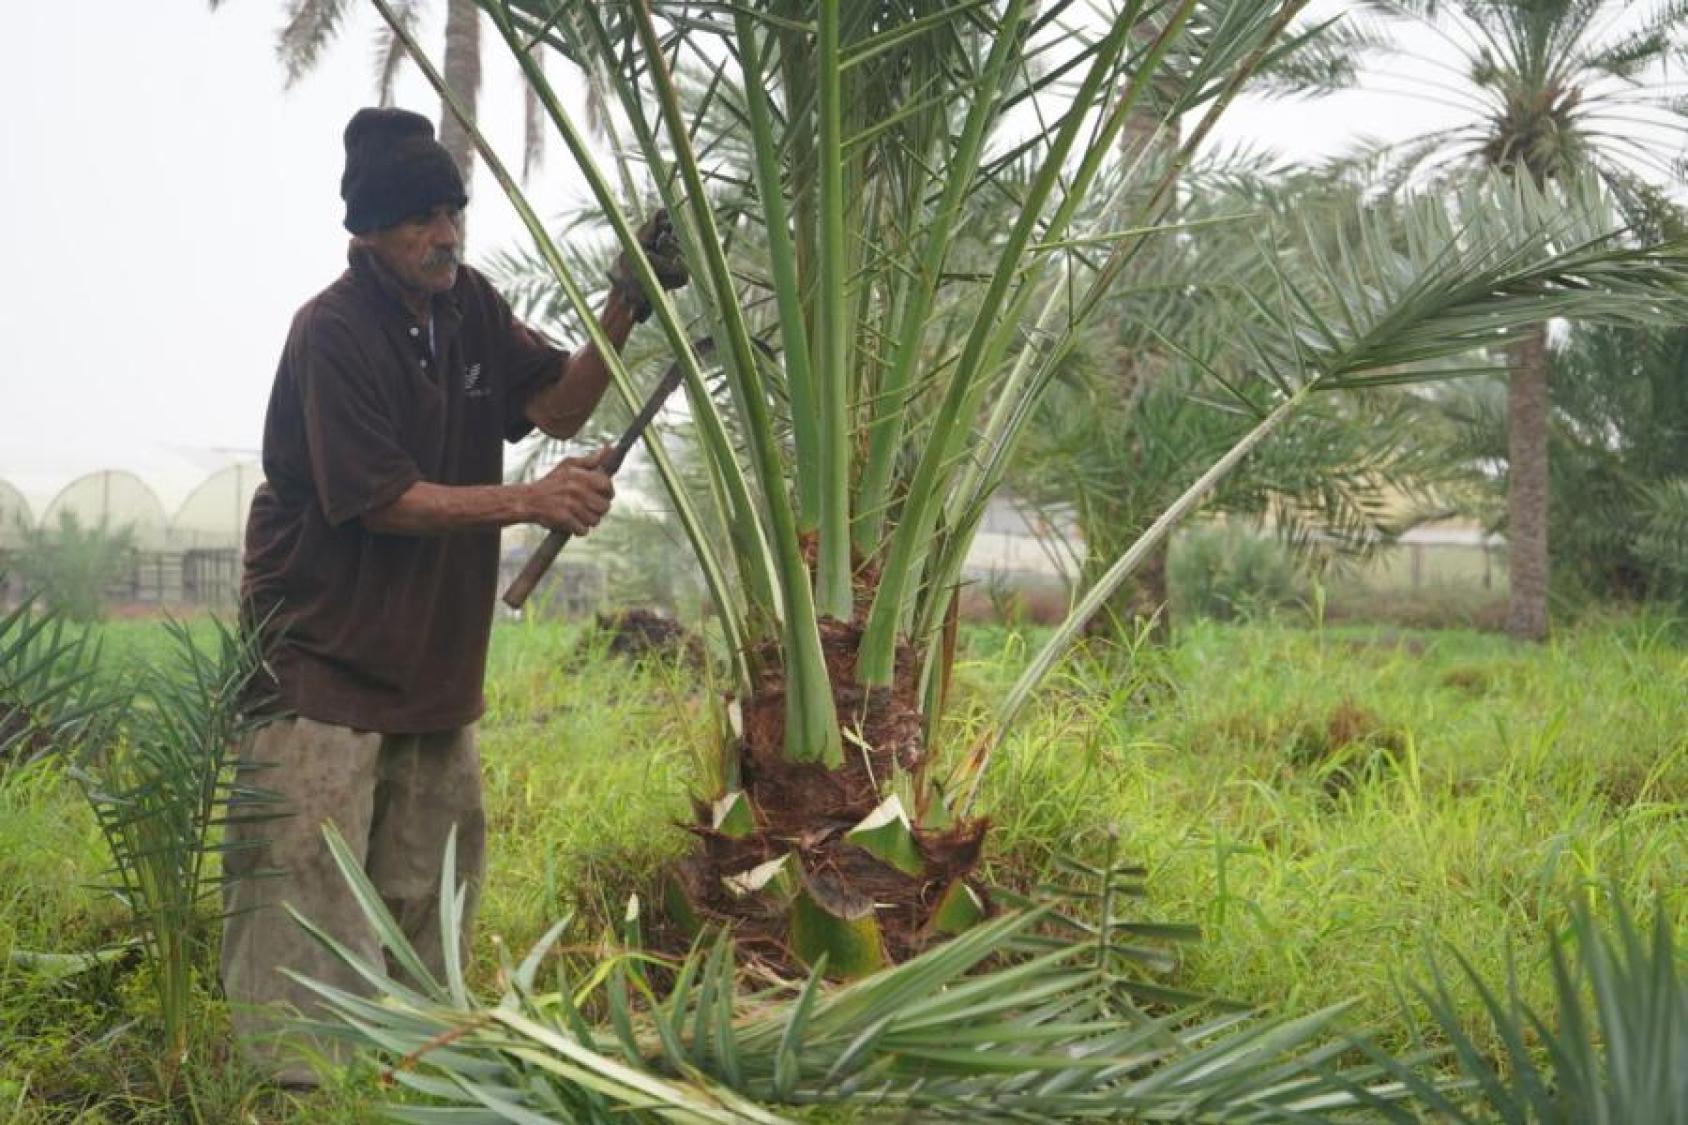 A farmer in dark clothes uses a sickle to cut a branch of a green palm tree in a farm in Bahrain